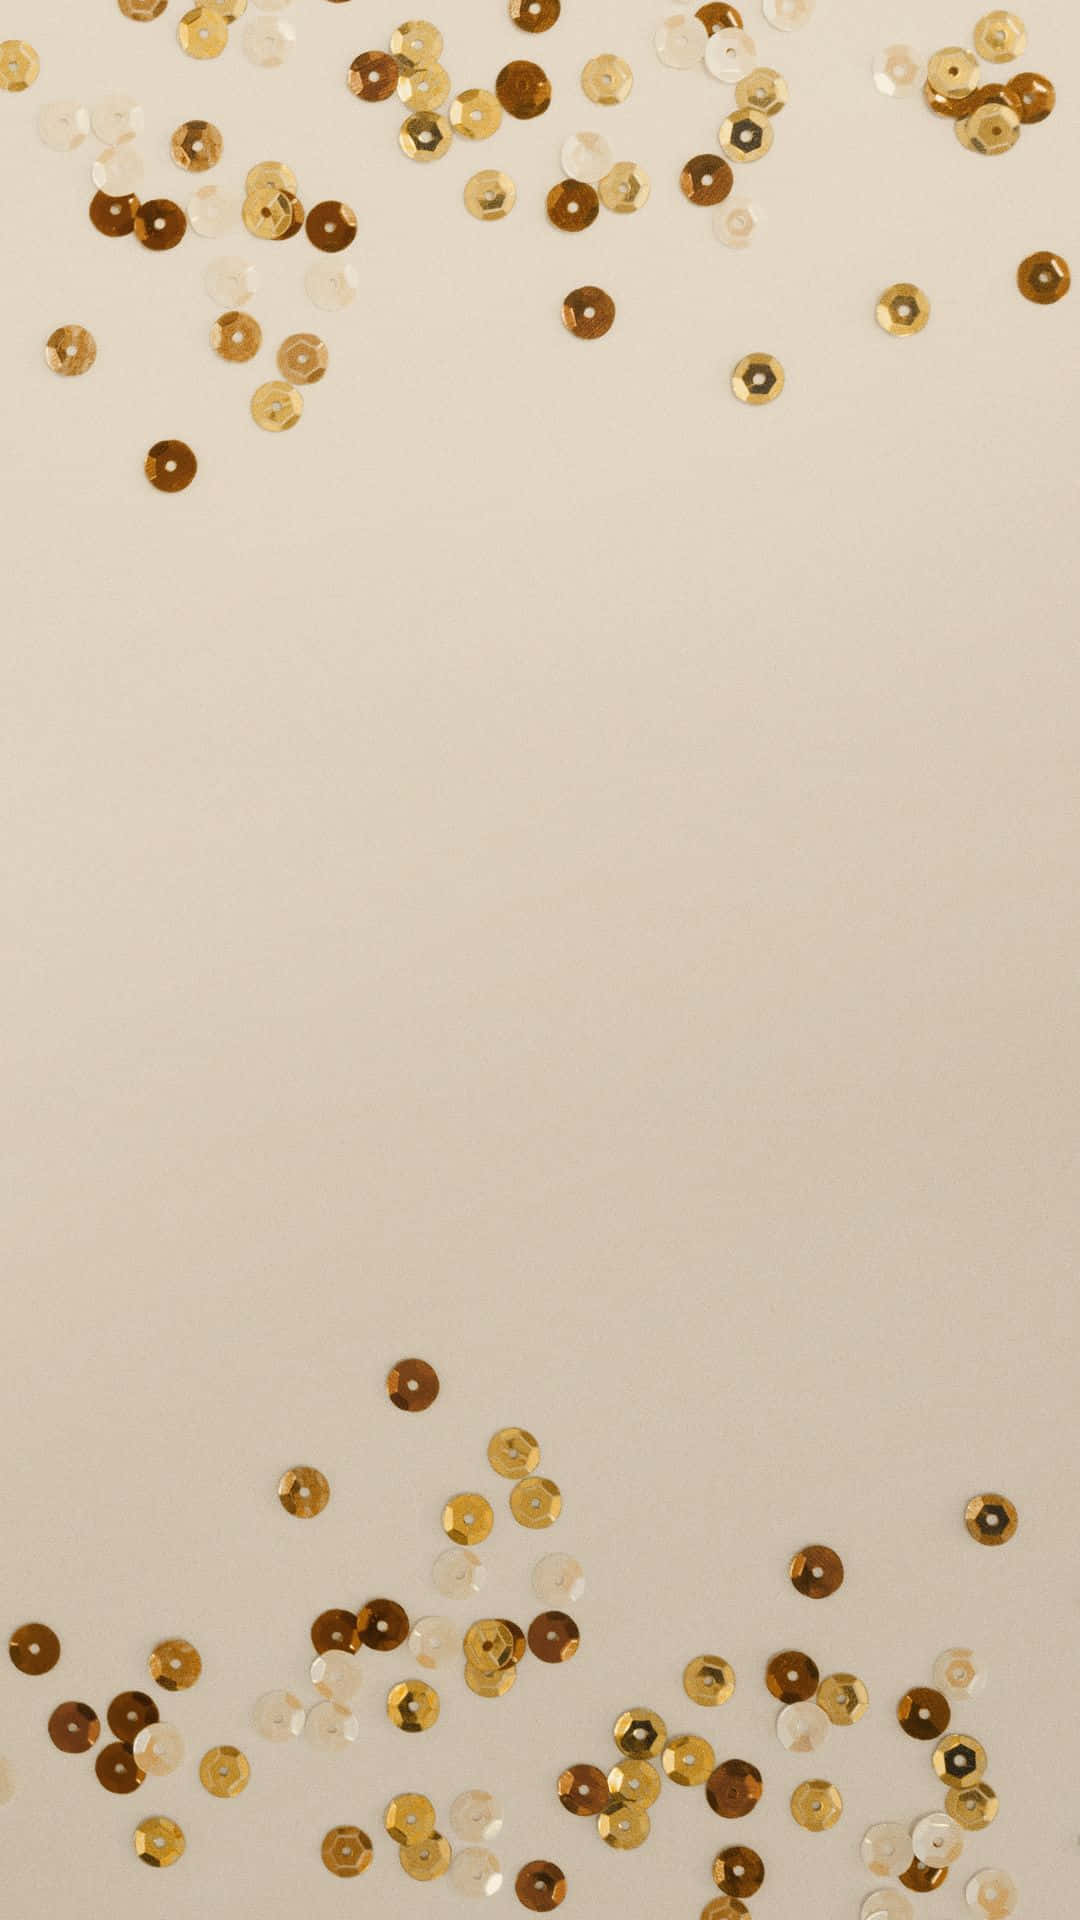 A stunning, sleek and stylish gold iPhone Wallpaper